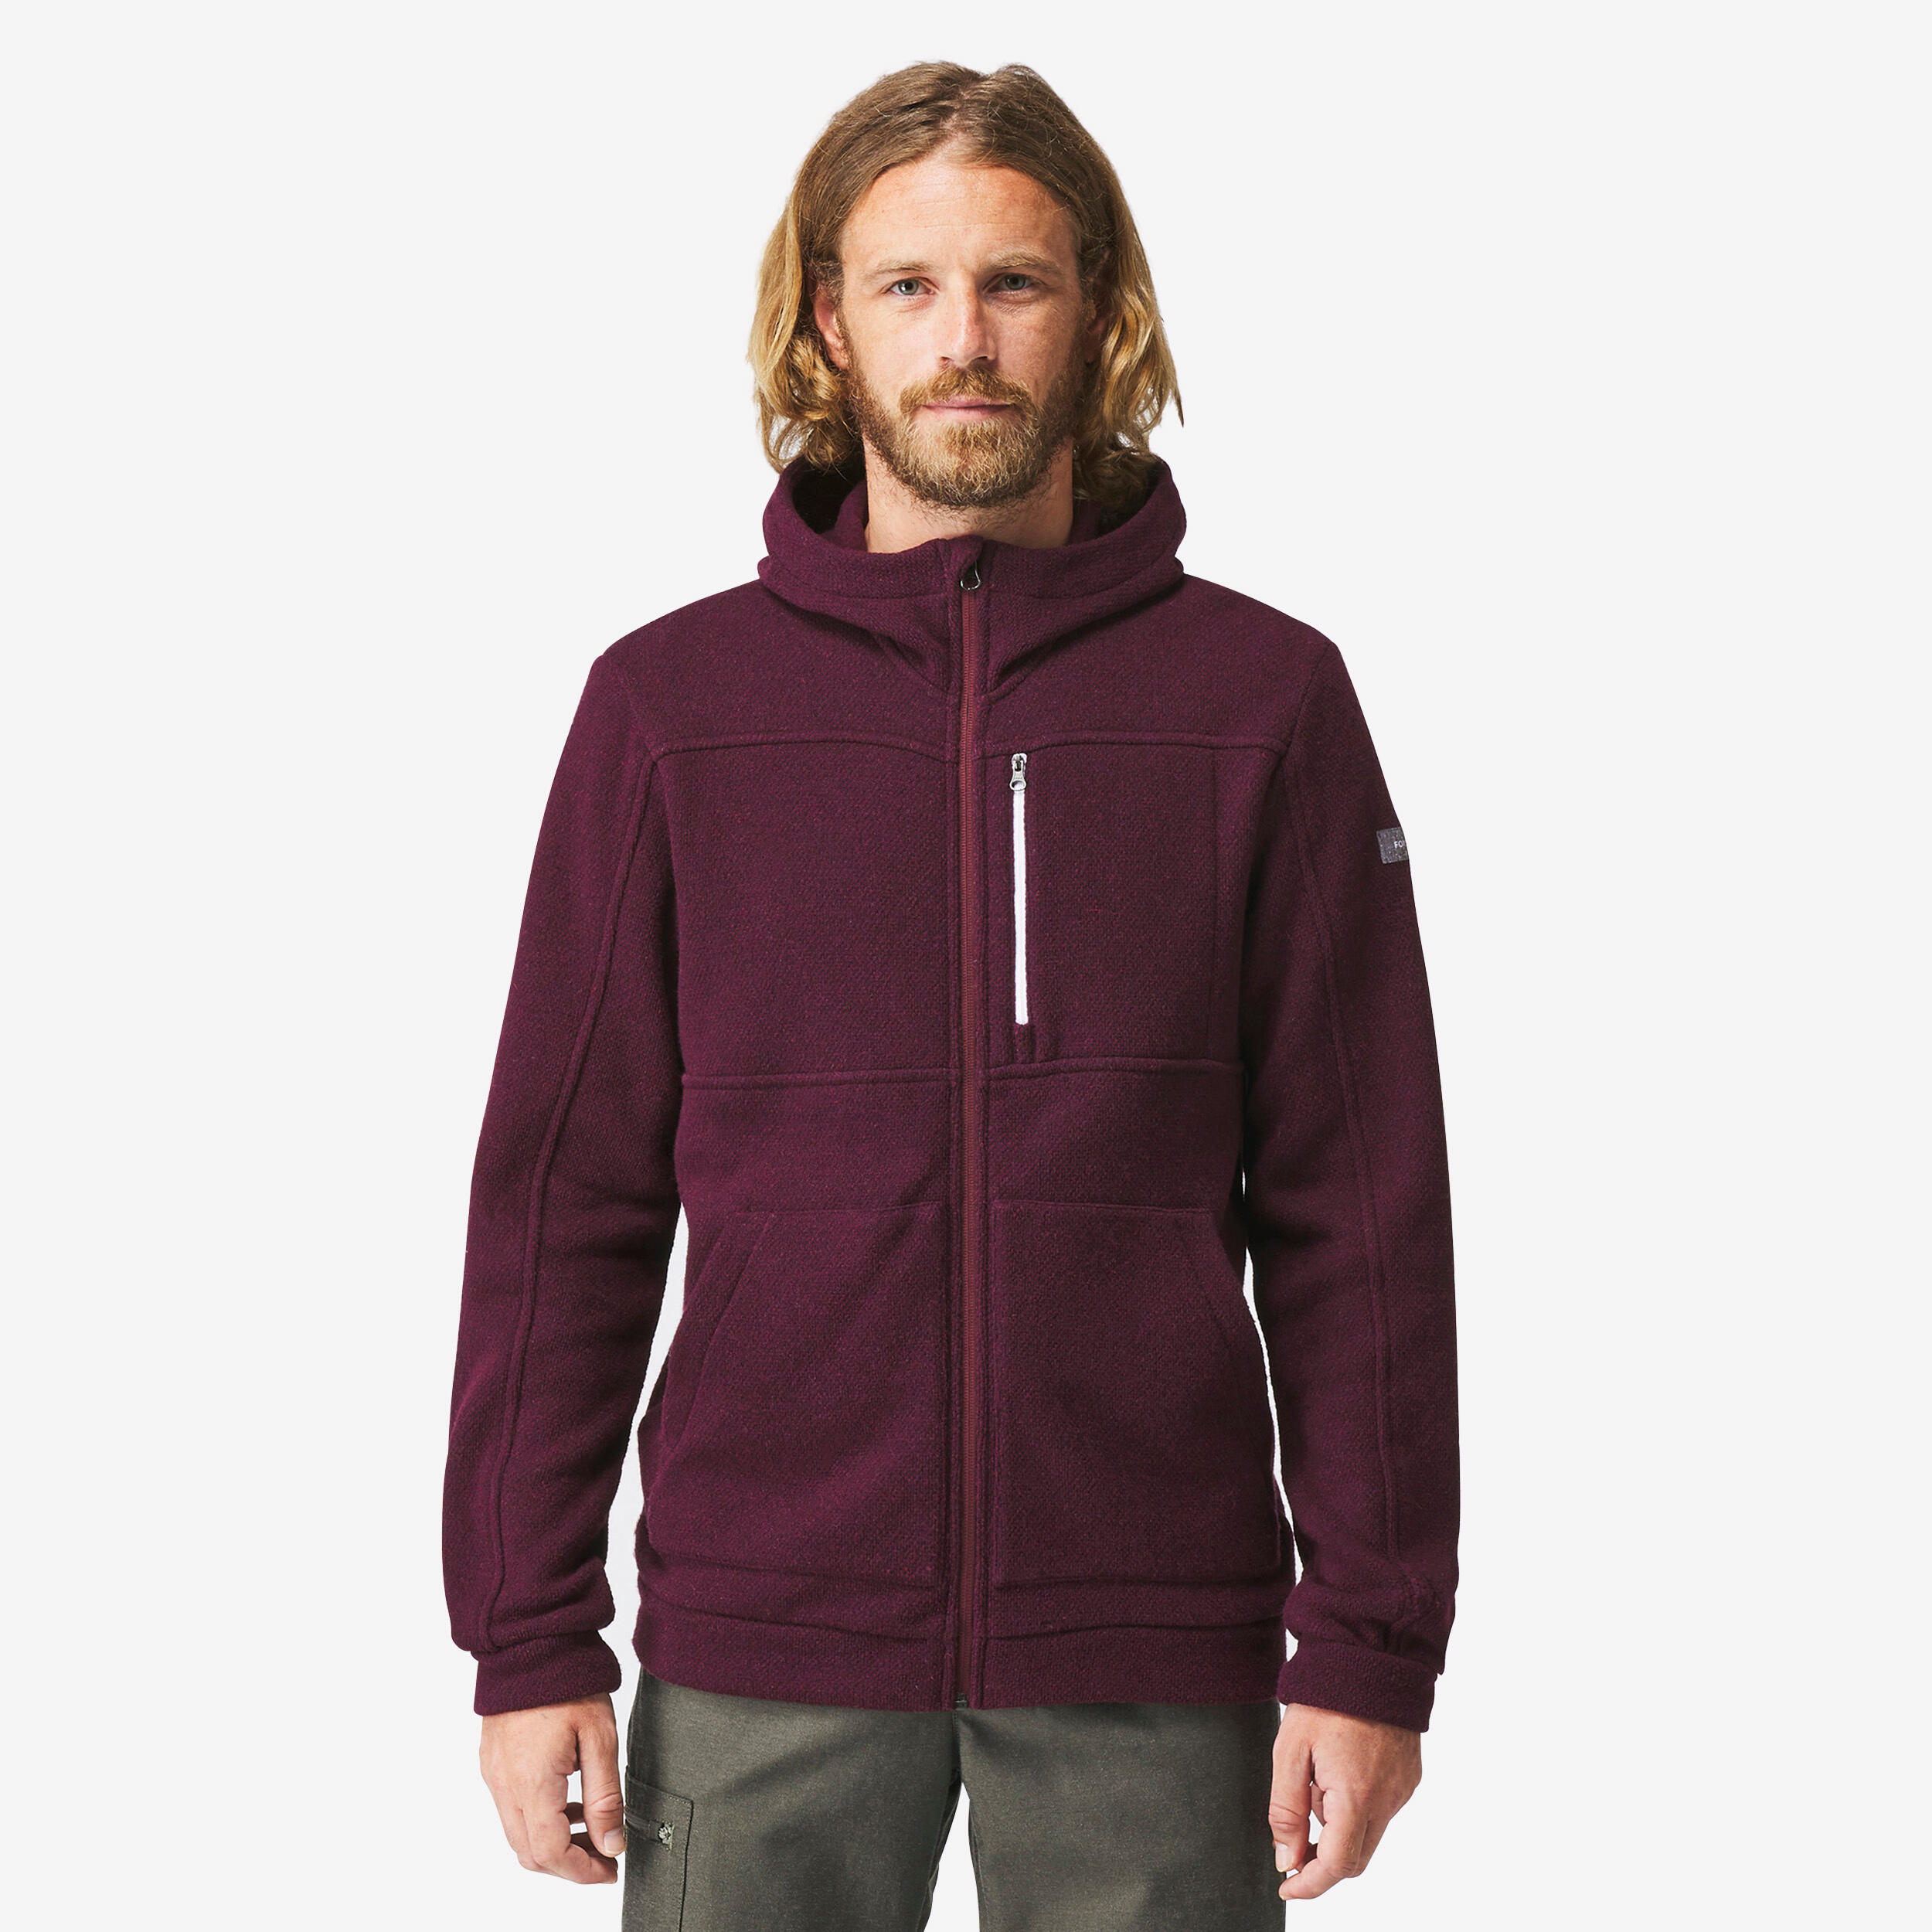 Decathlon UK Forclaz Men’s Wool Hooded Sweatshirt - Minimal Editions Local